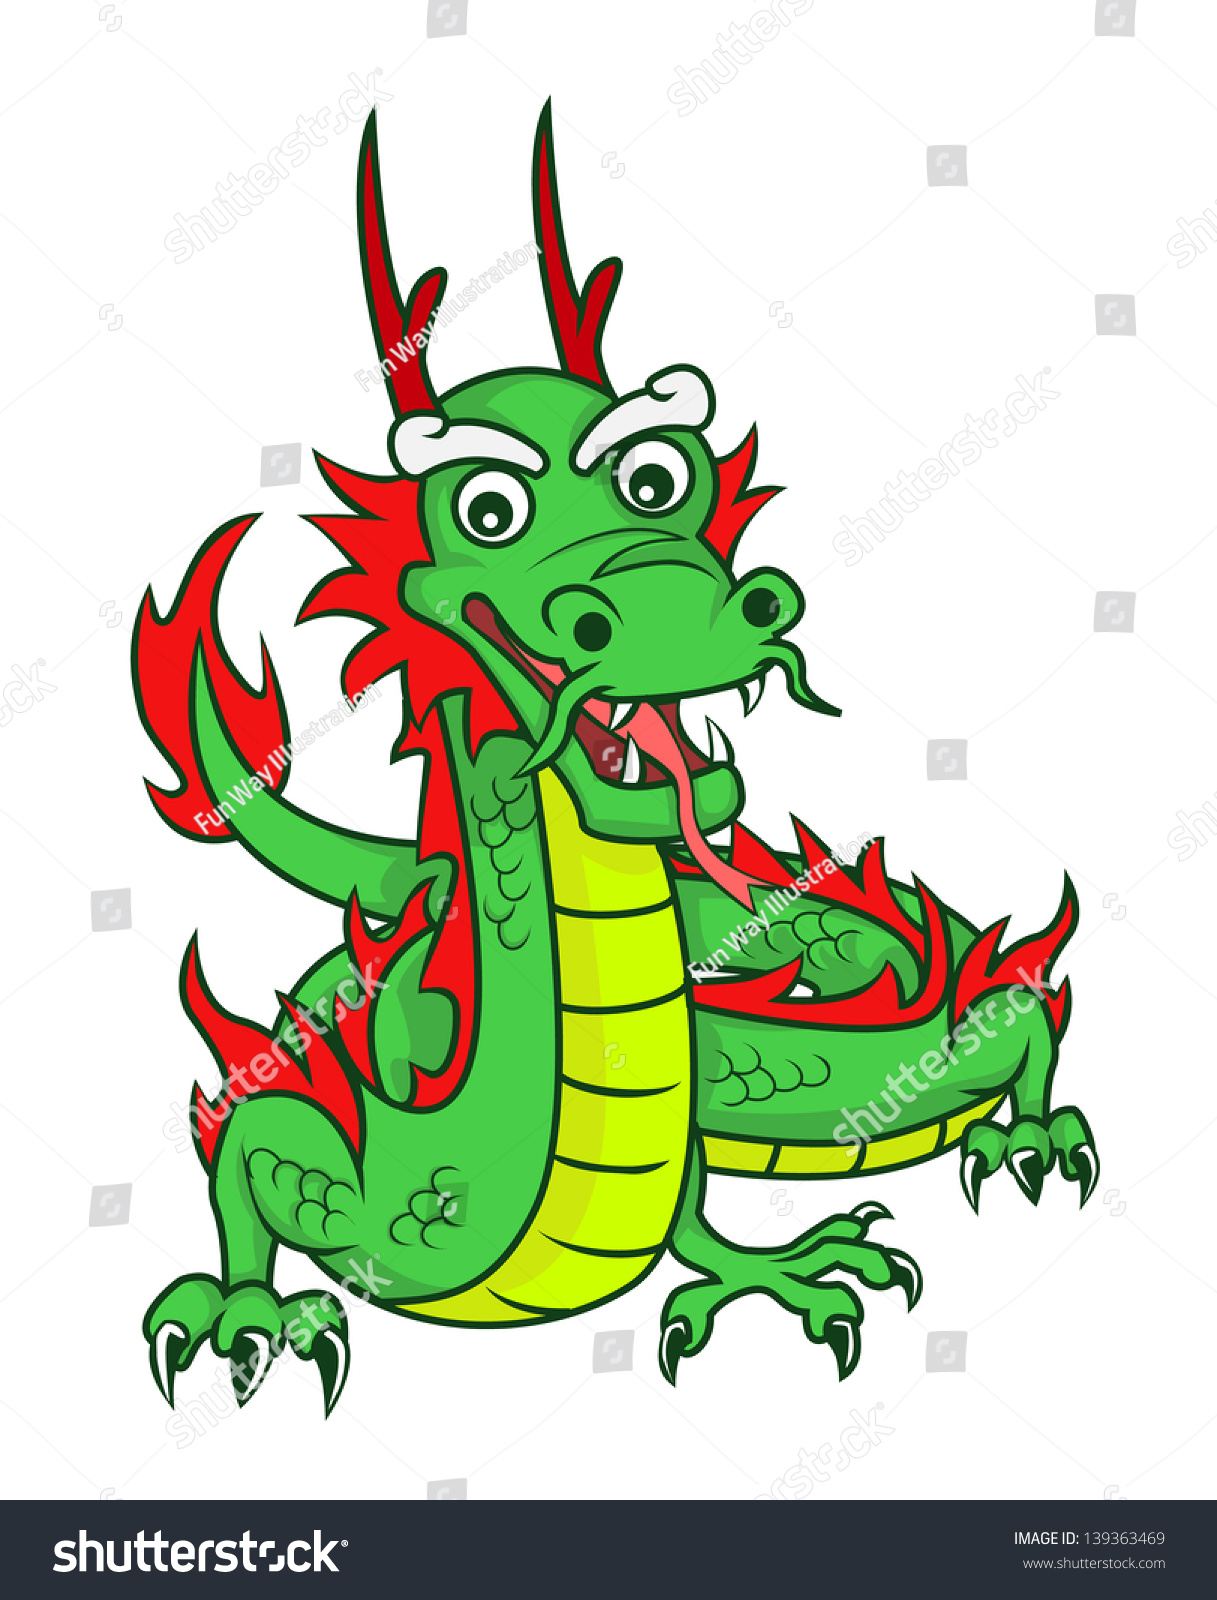 Dragon Stock Vector Illustration 139363469 : Shutterstock